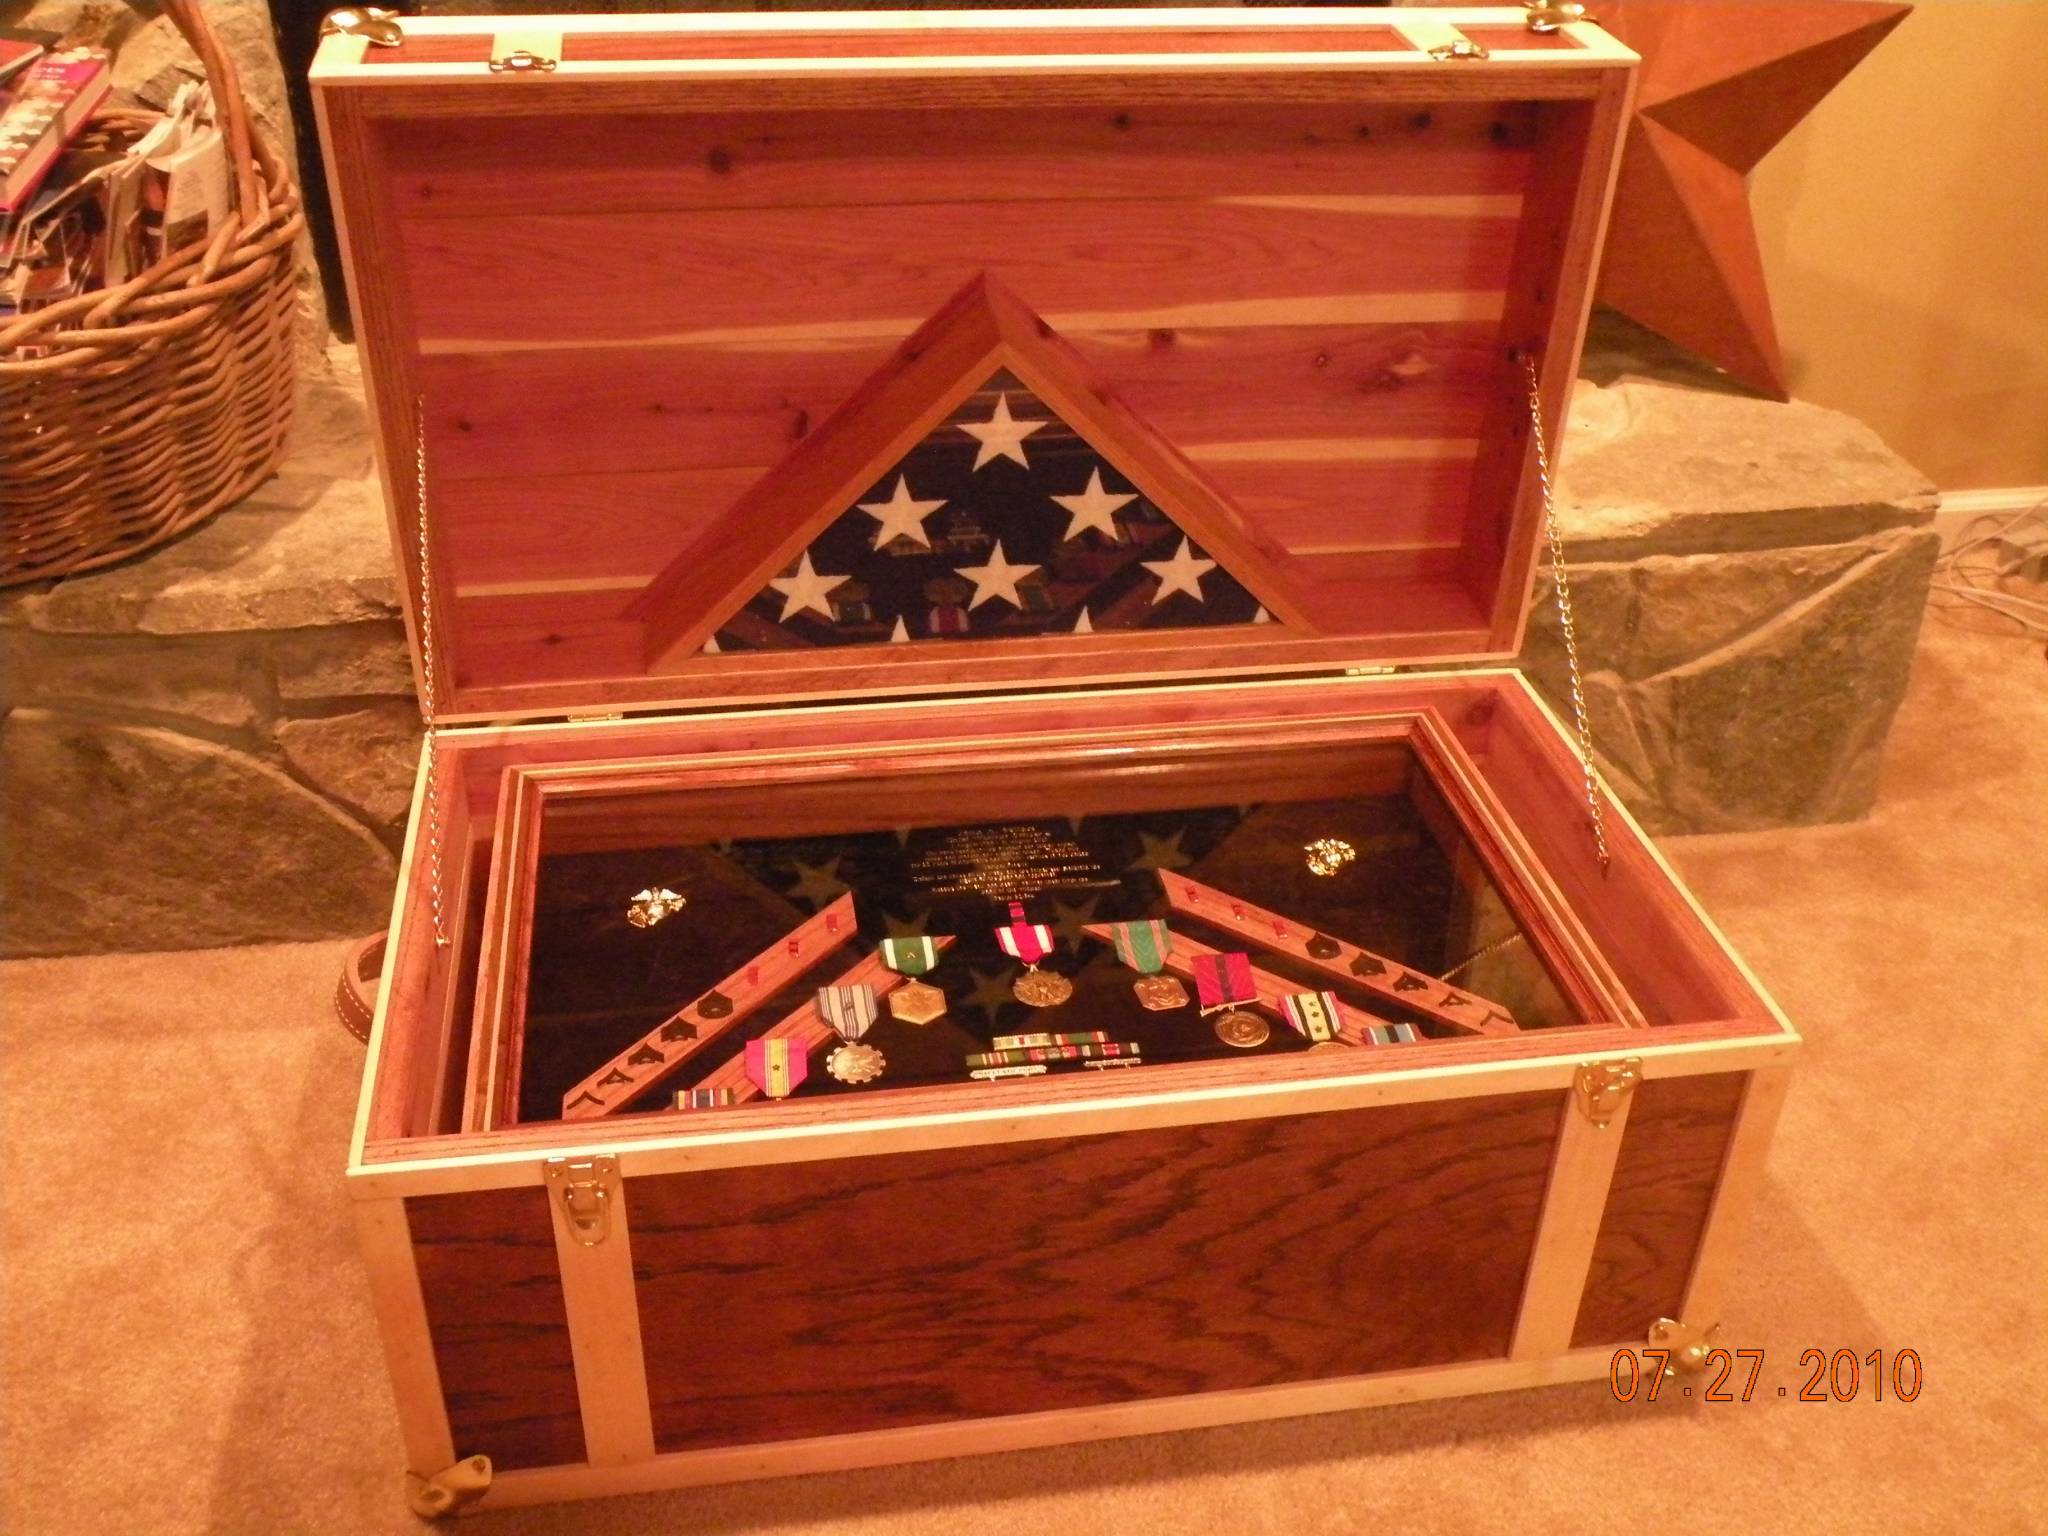 Military retirement chest